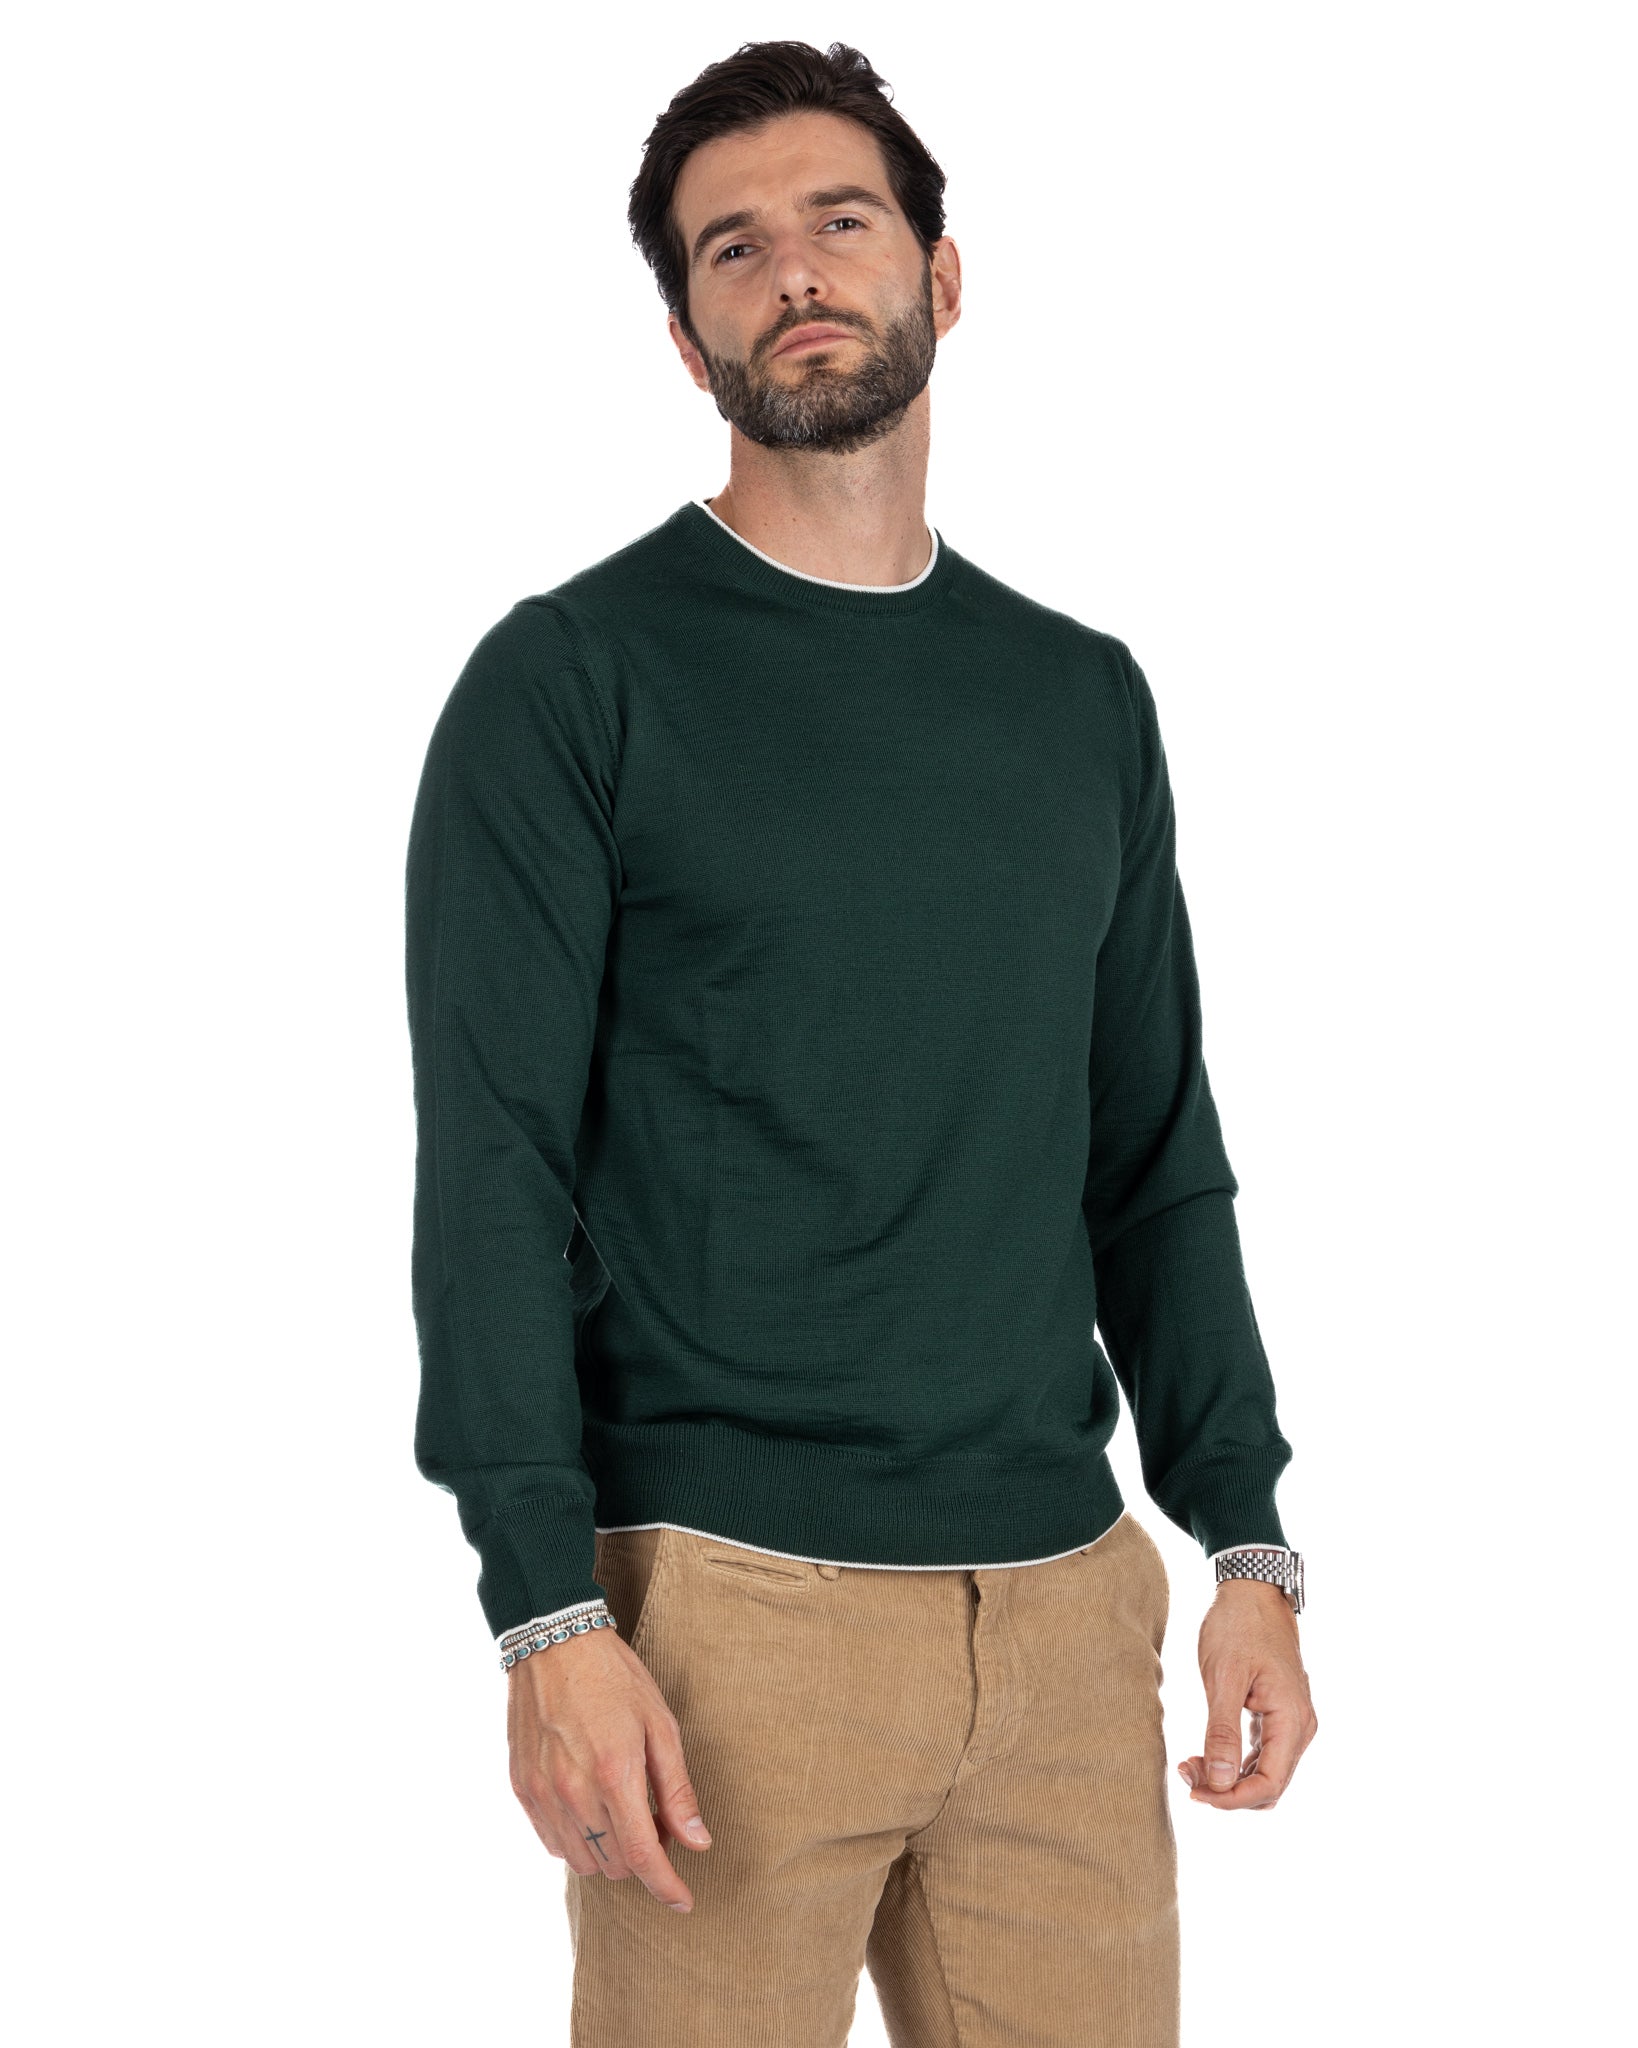 Seve - green sweater with cream edge